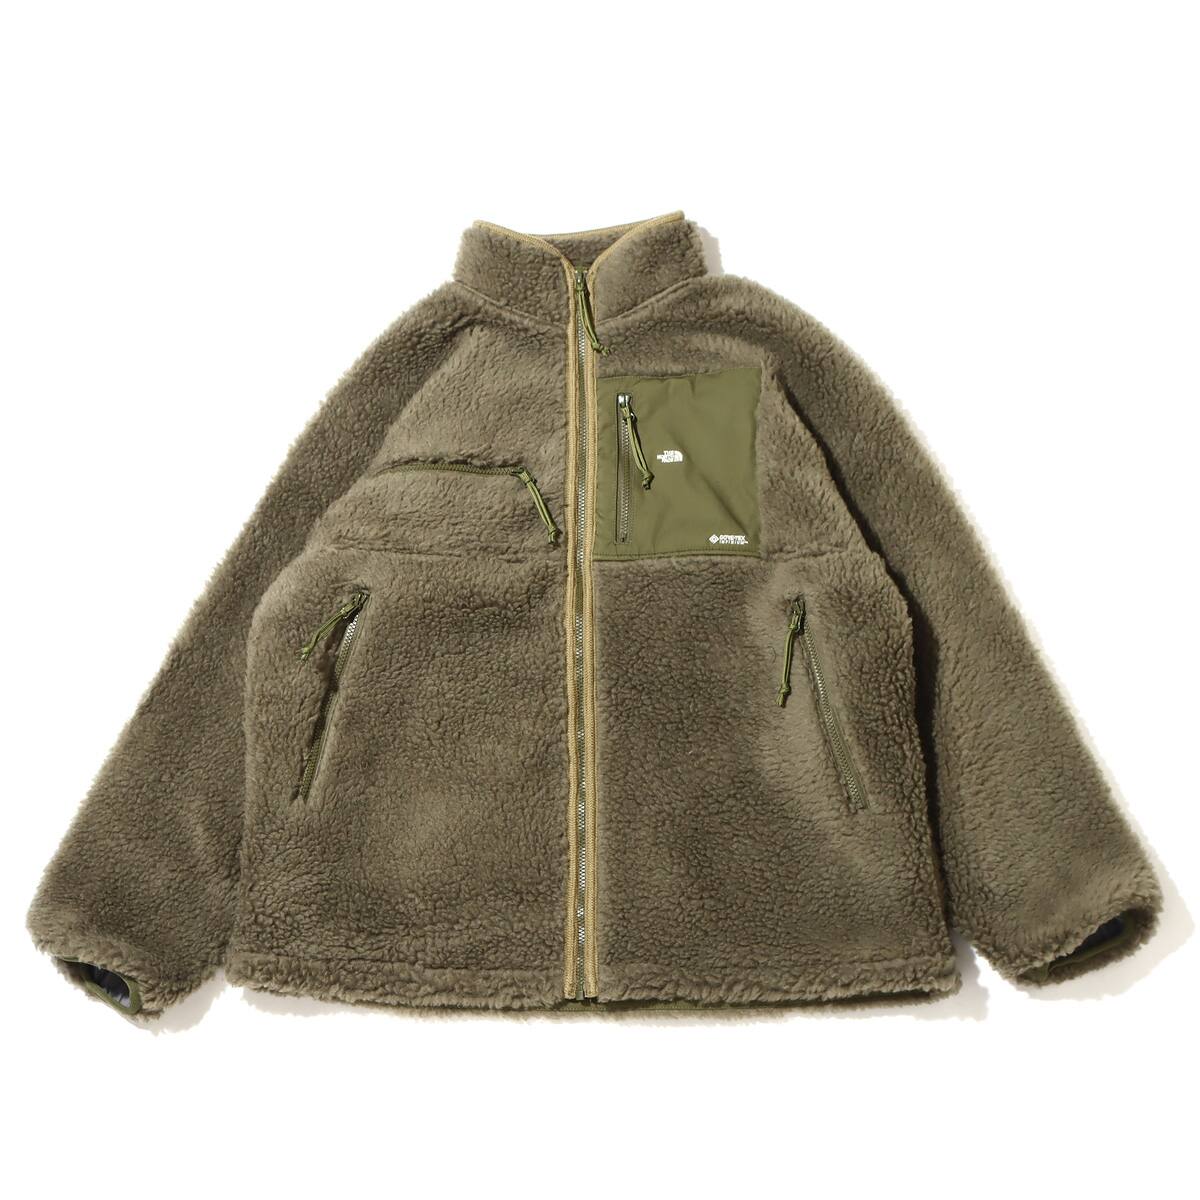 THE NORTH FACE PURPLE LABEL Wool Boa Fleece Field Jacket Olive FW I